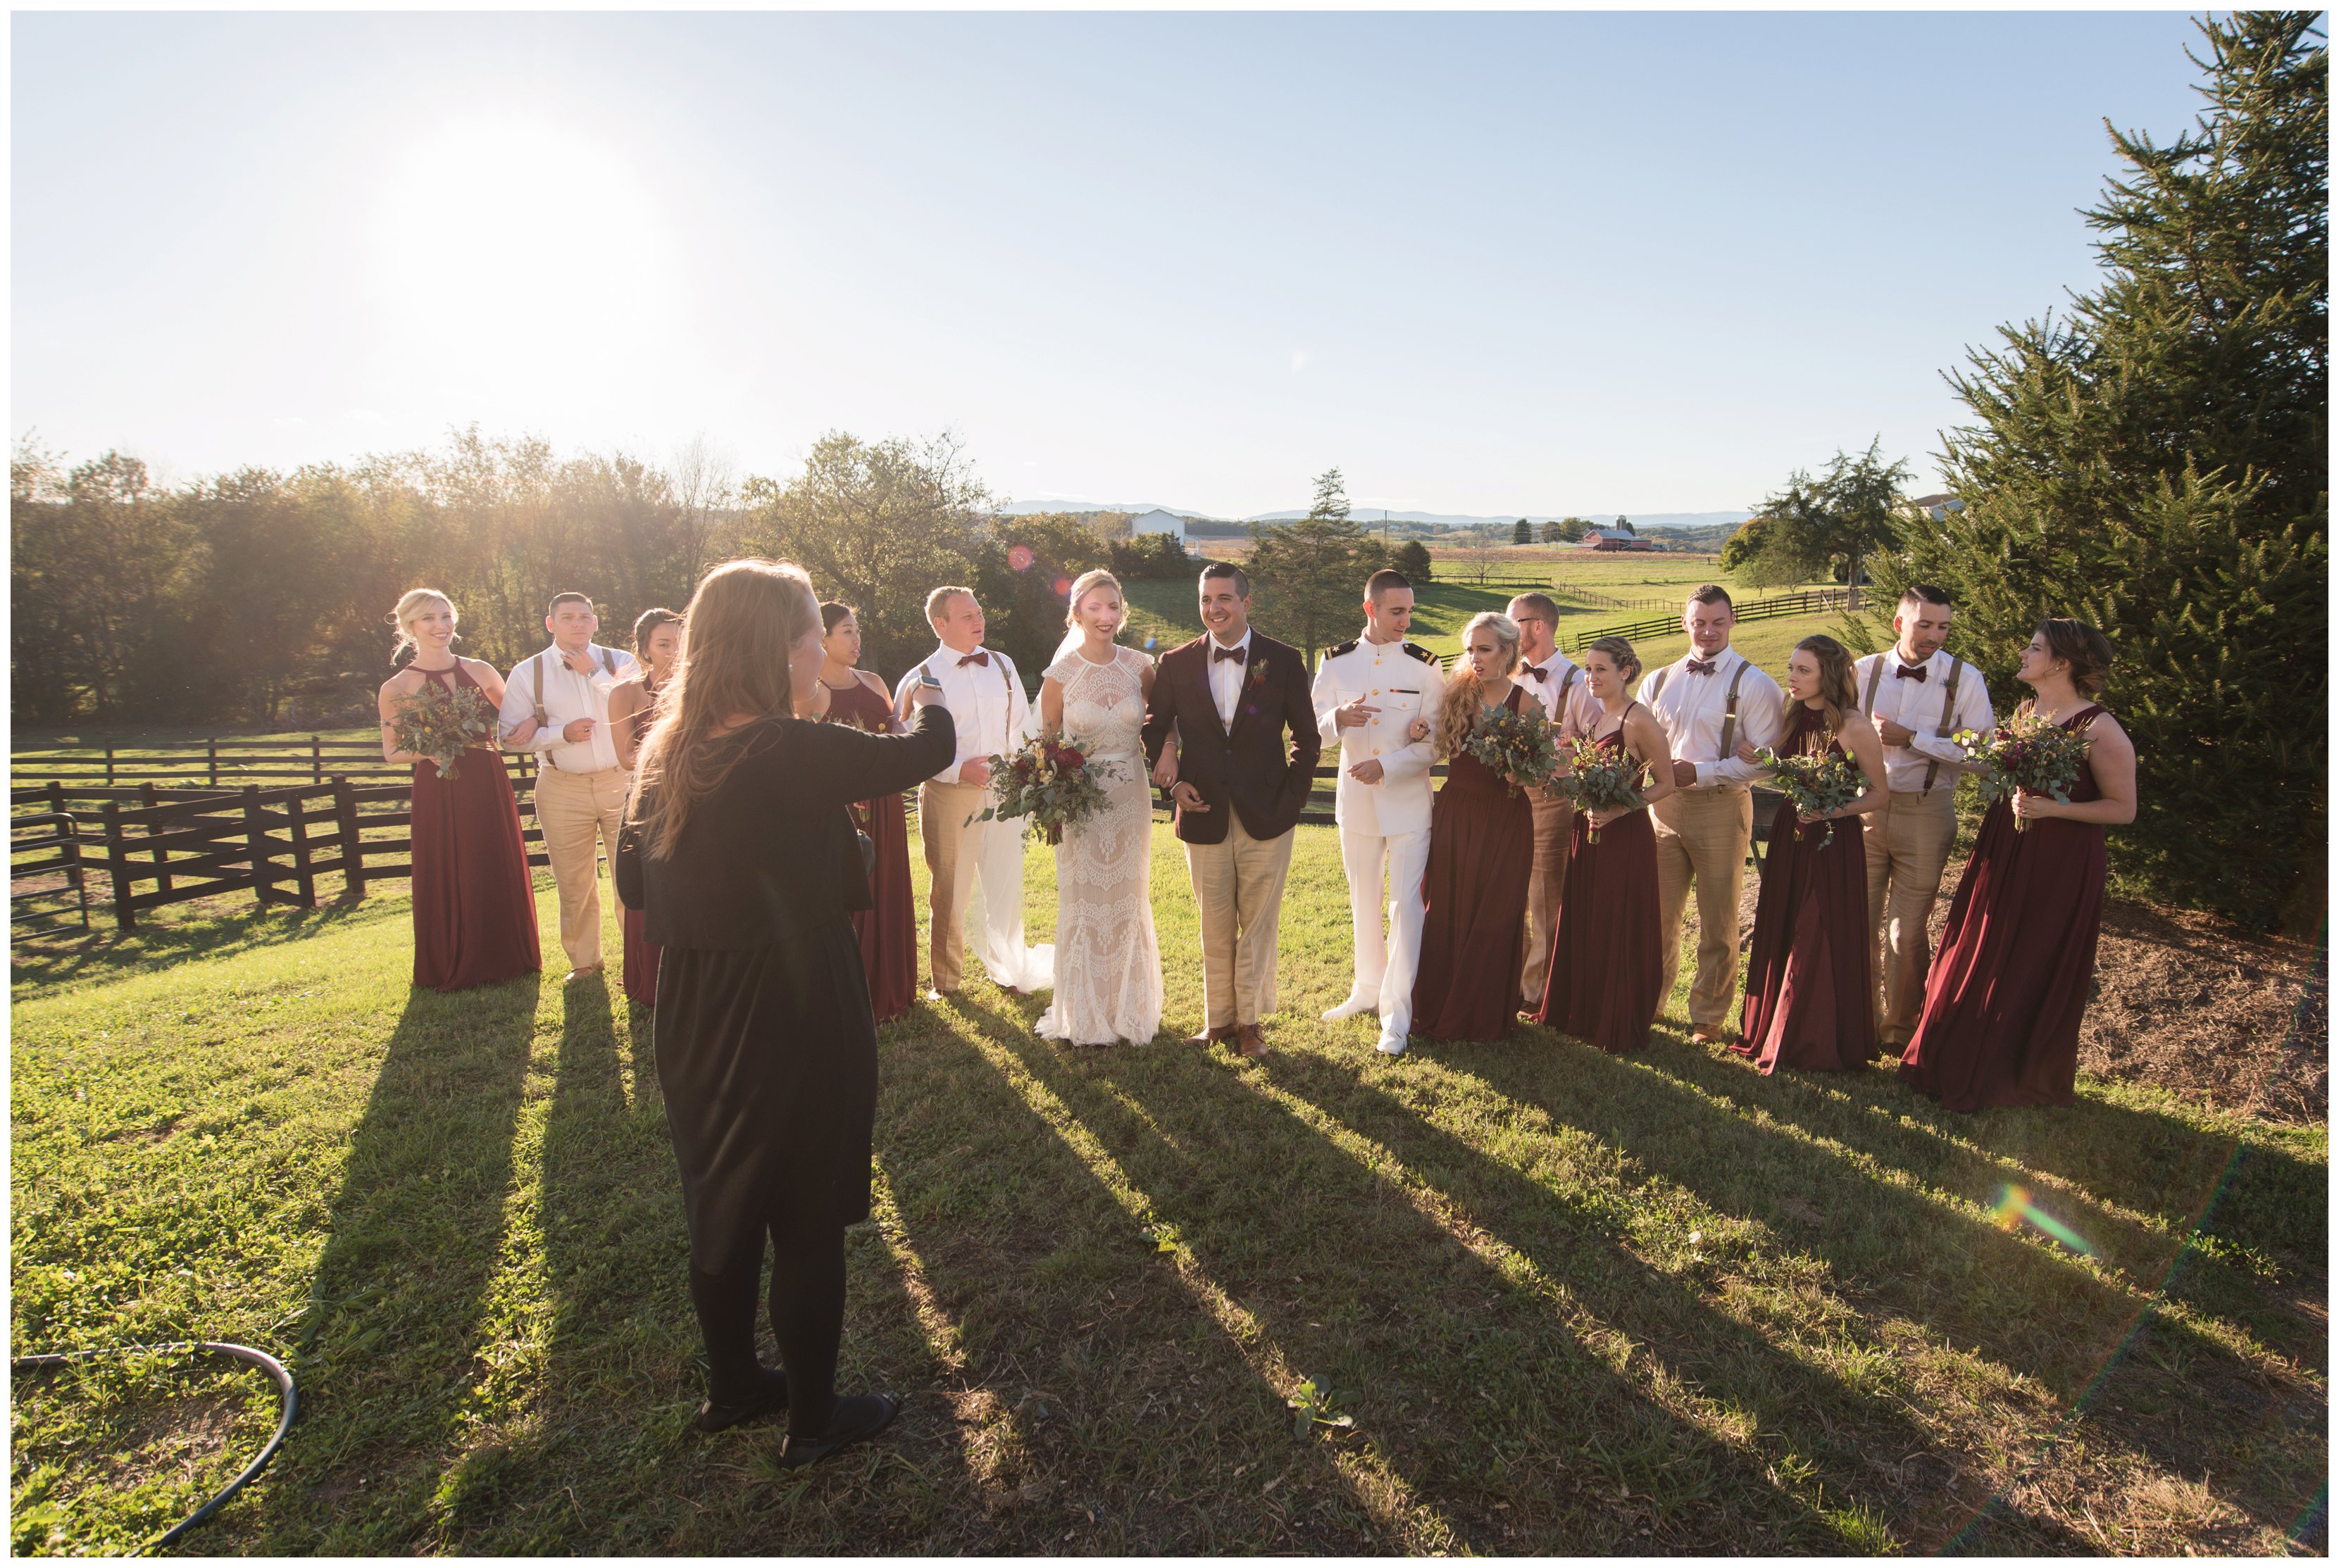 va photographer arranges bridal party during wedding day portraits